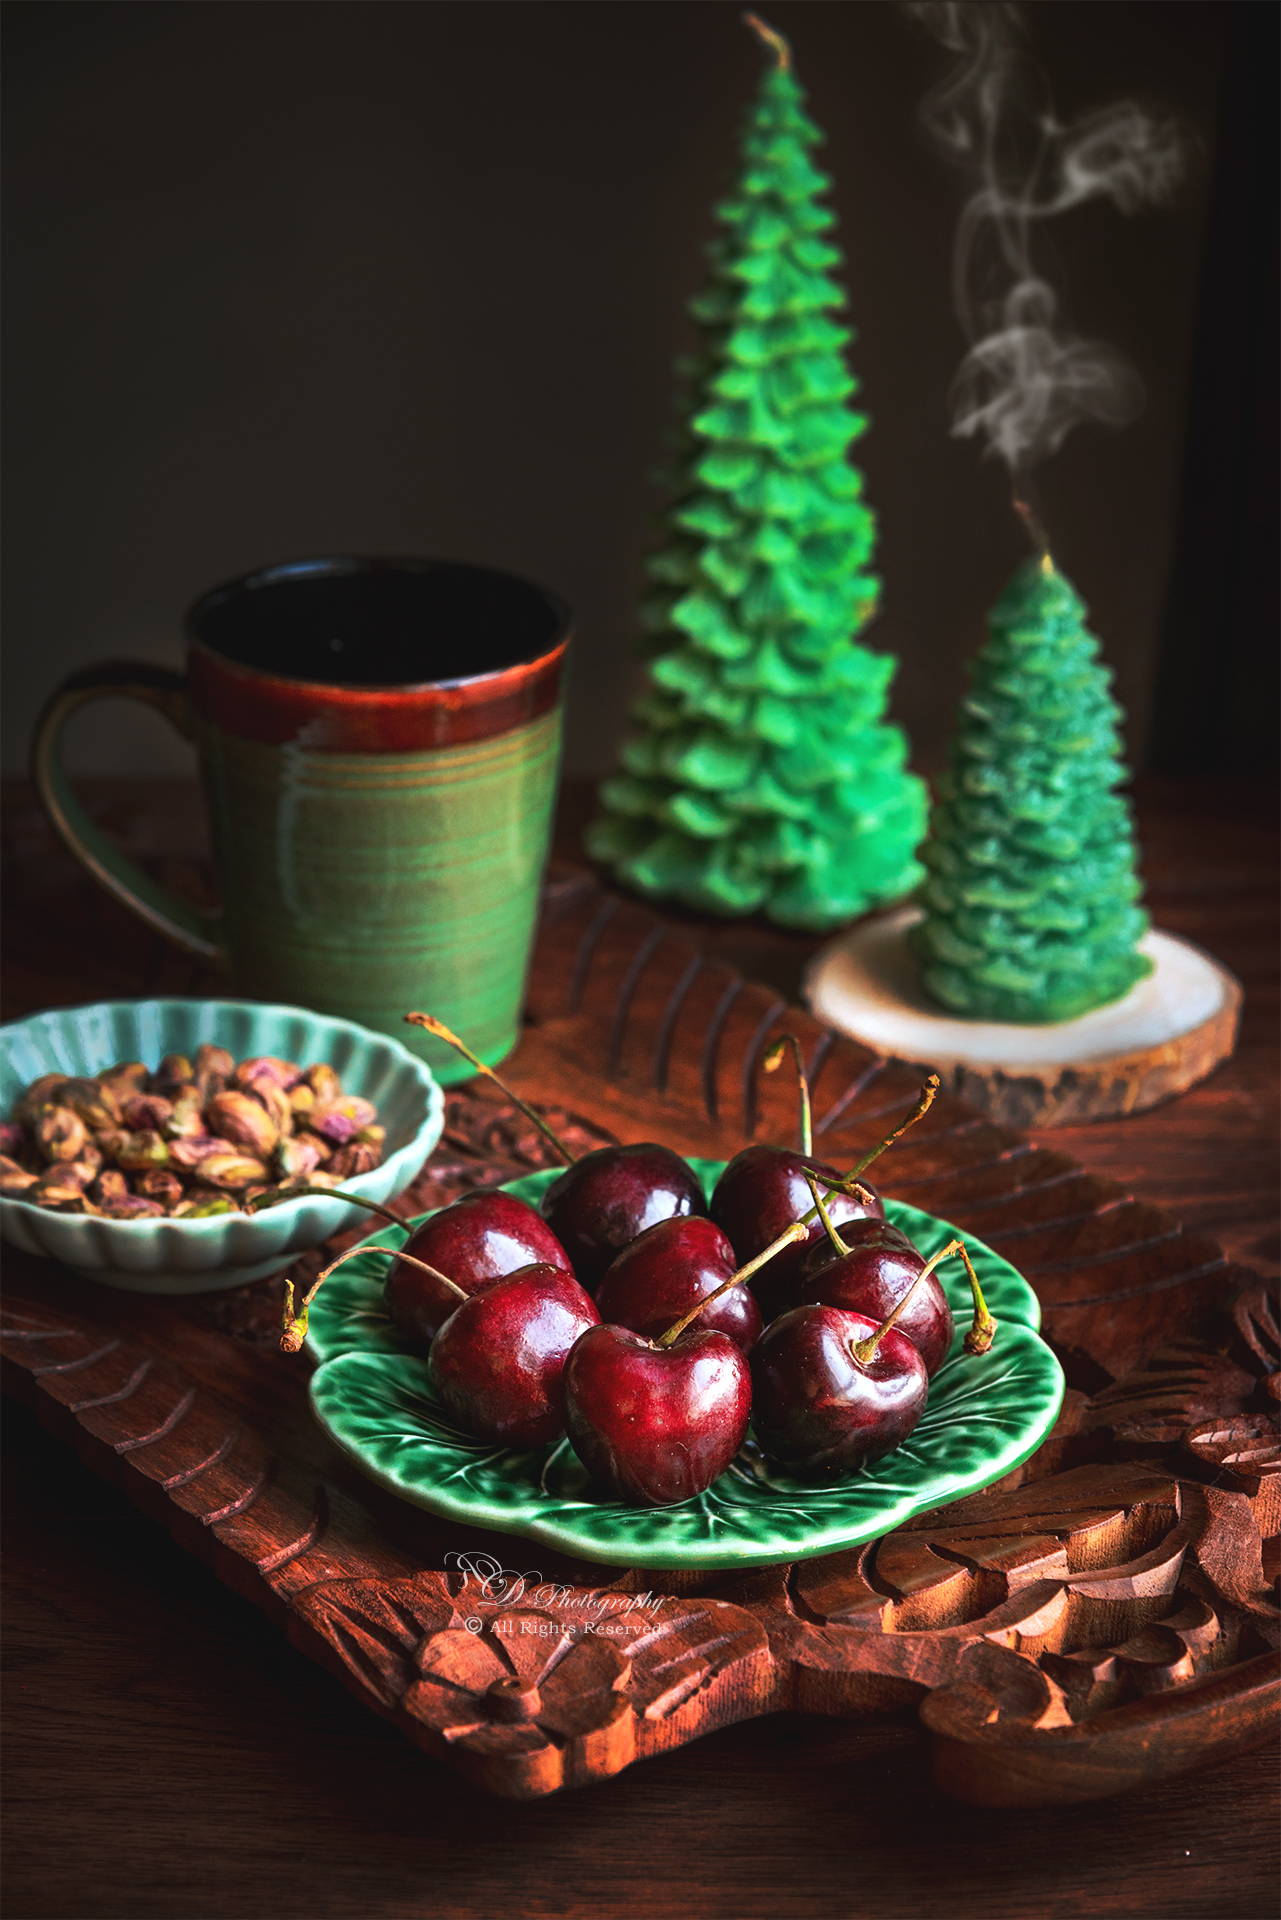 Sweet Cherry on Christmas Food Photography